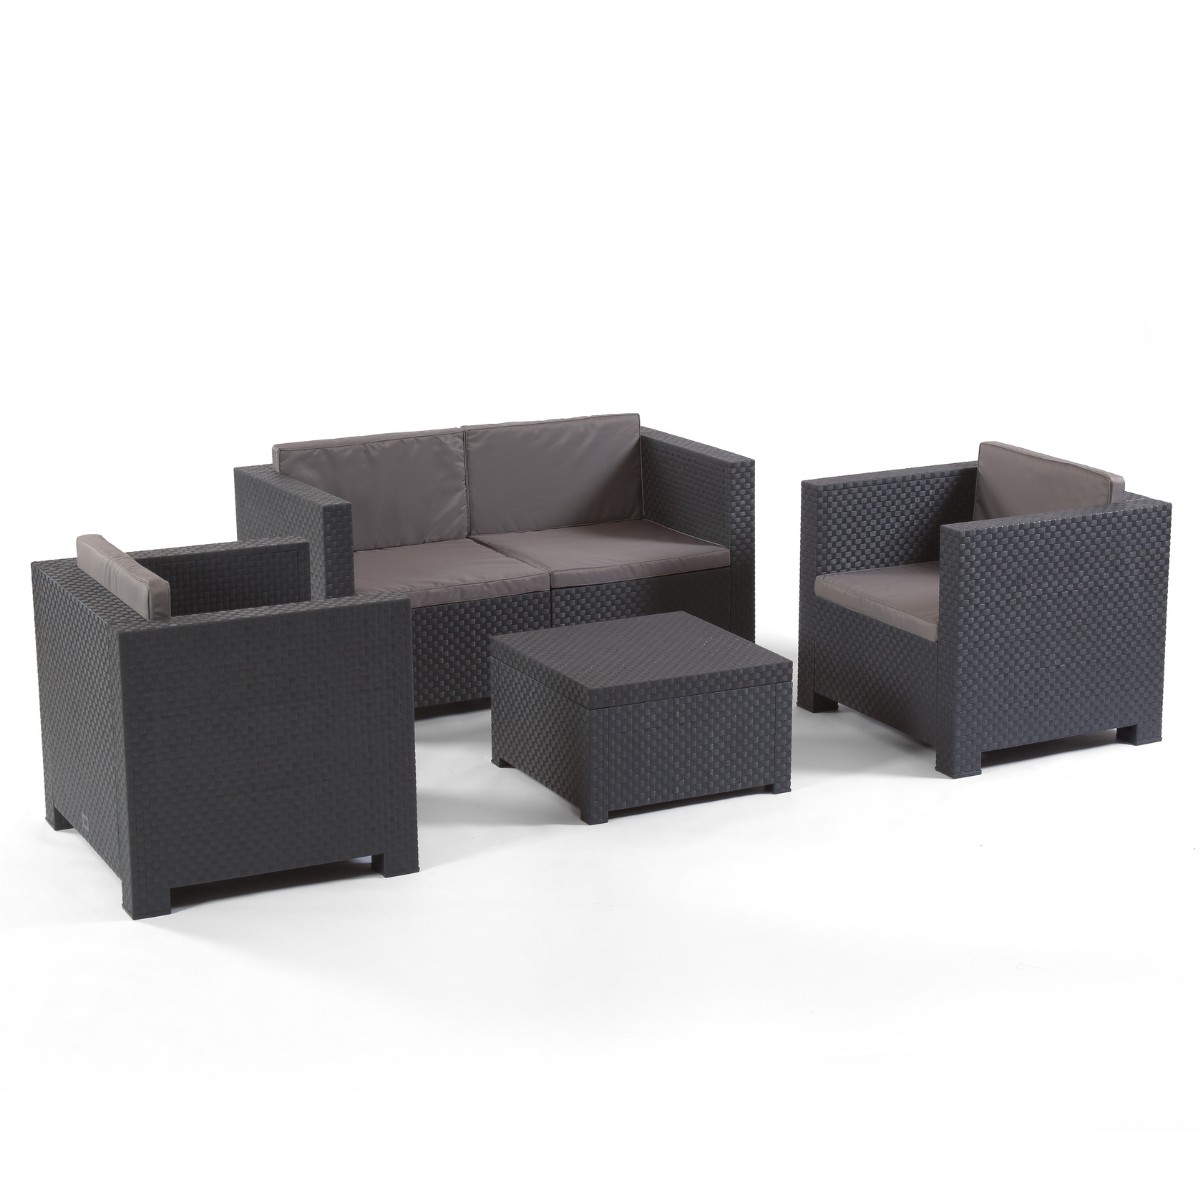 Dalkey Outdoor Sofa Set with Storage